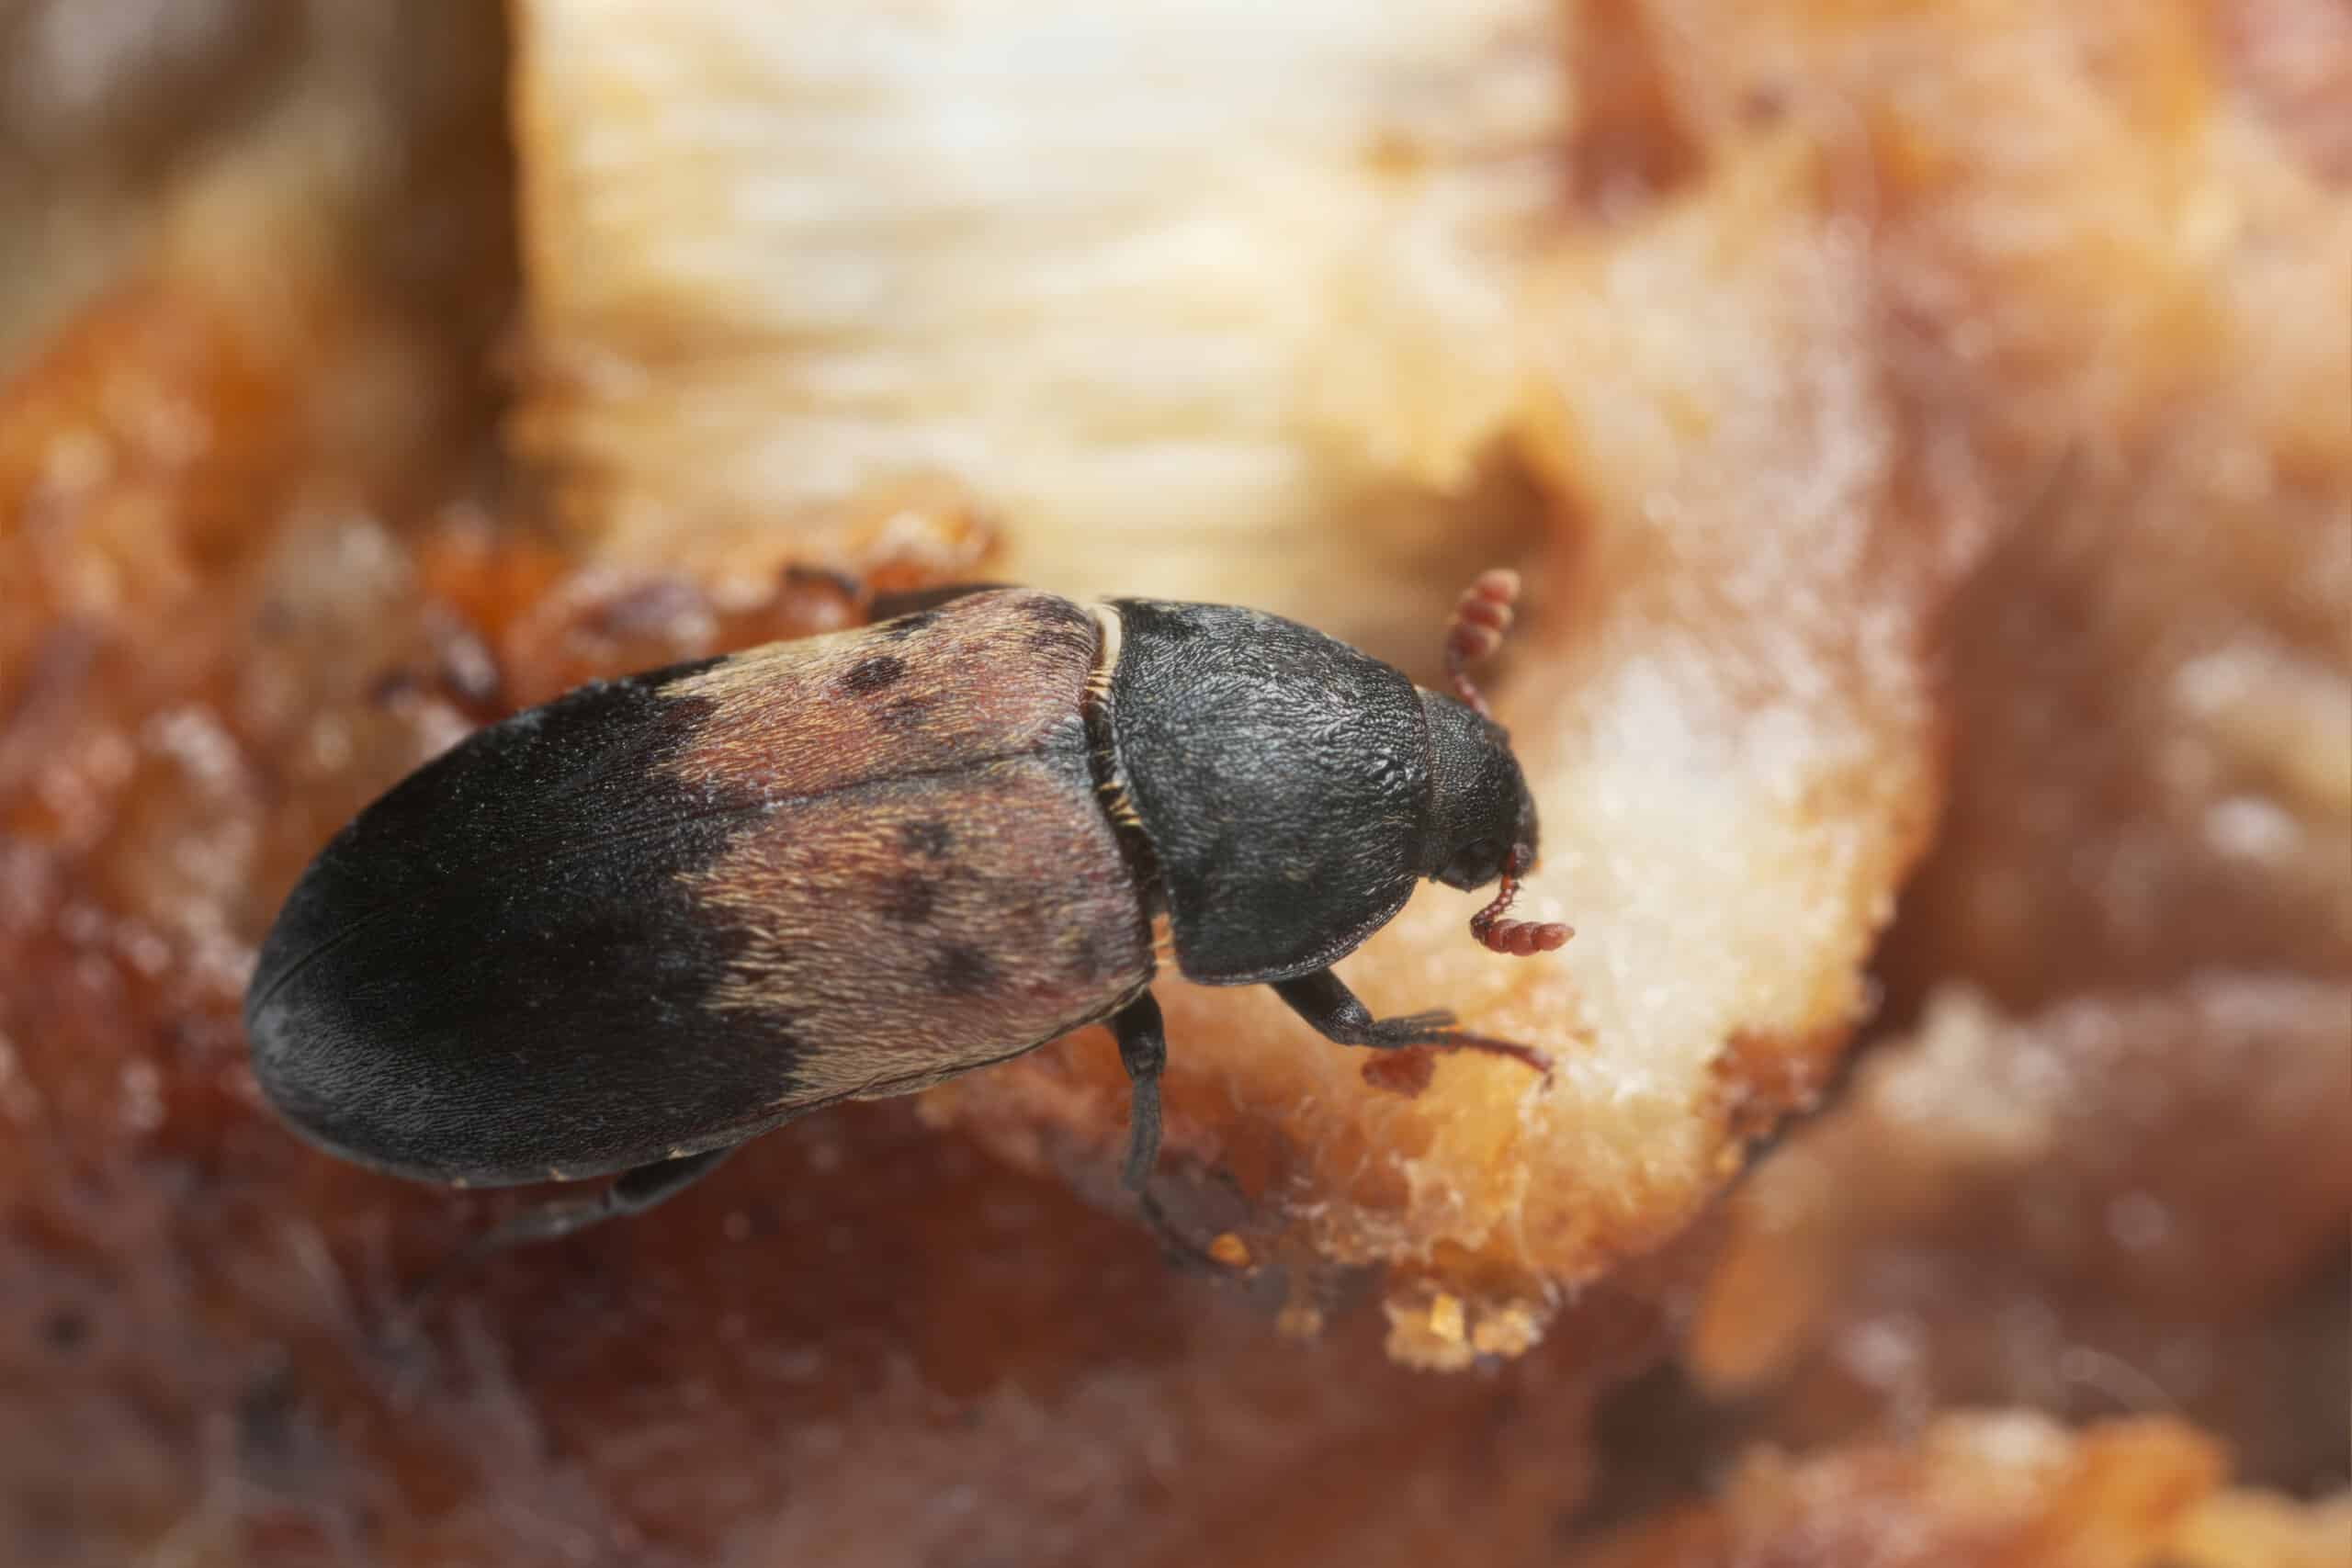 Black carpet beetle - Wikipedia